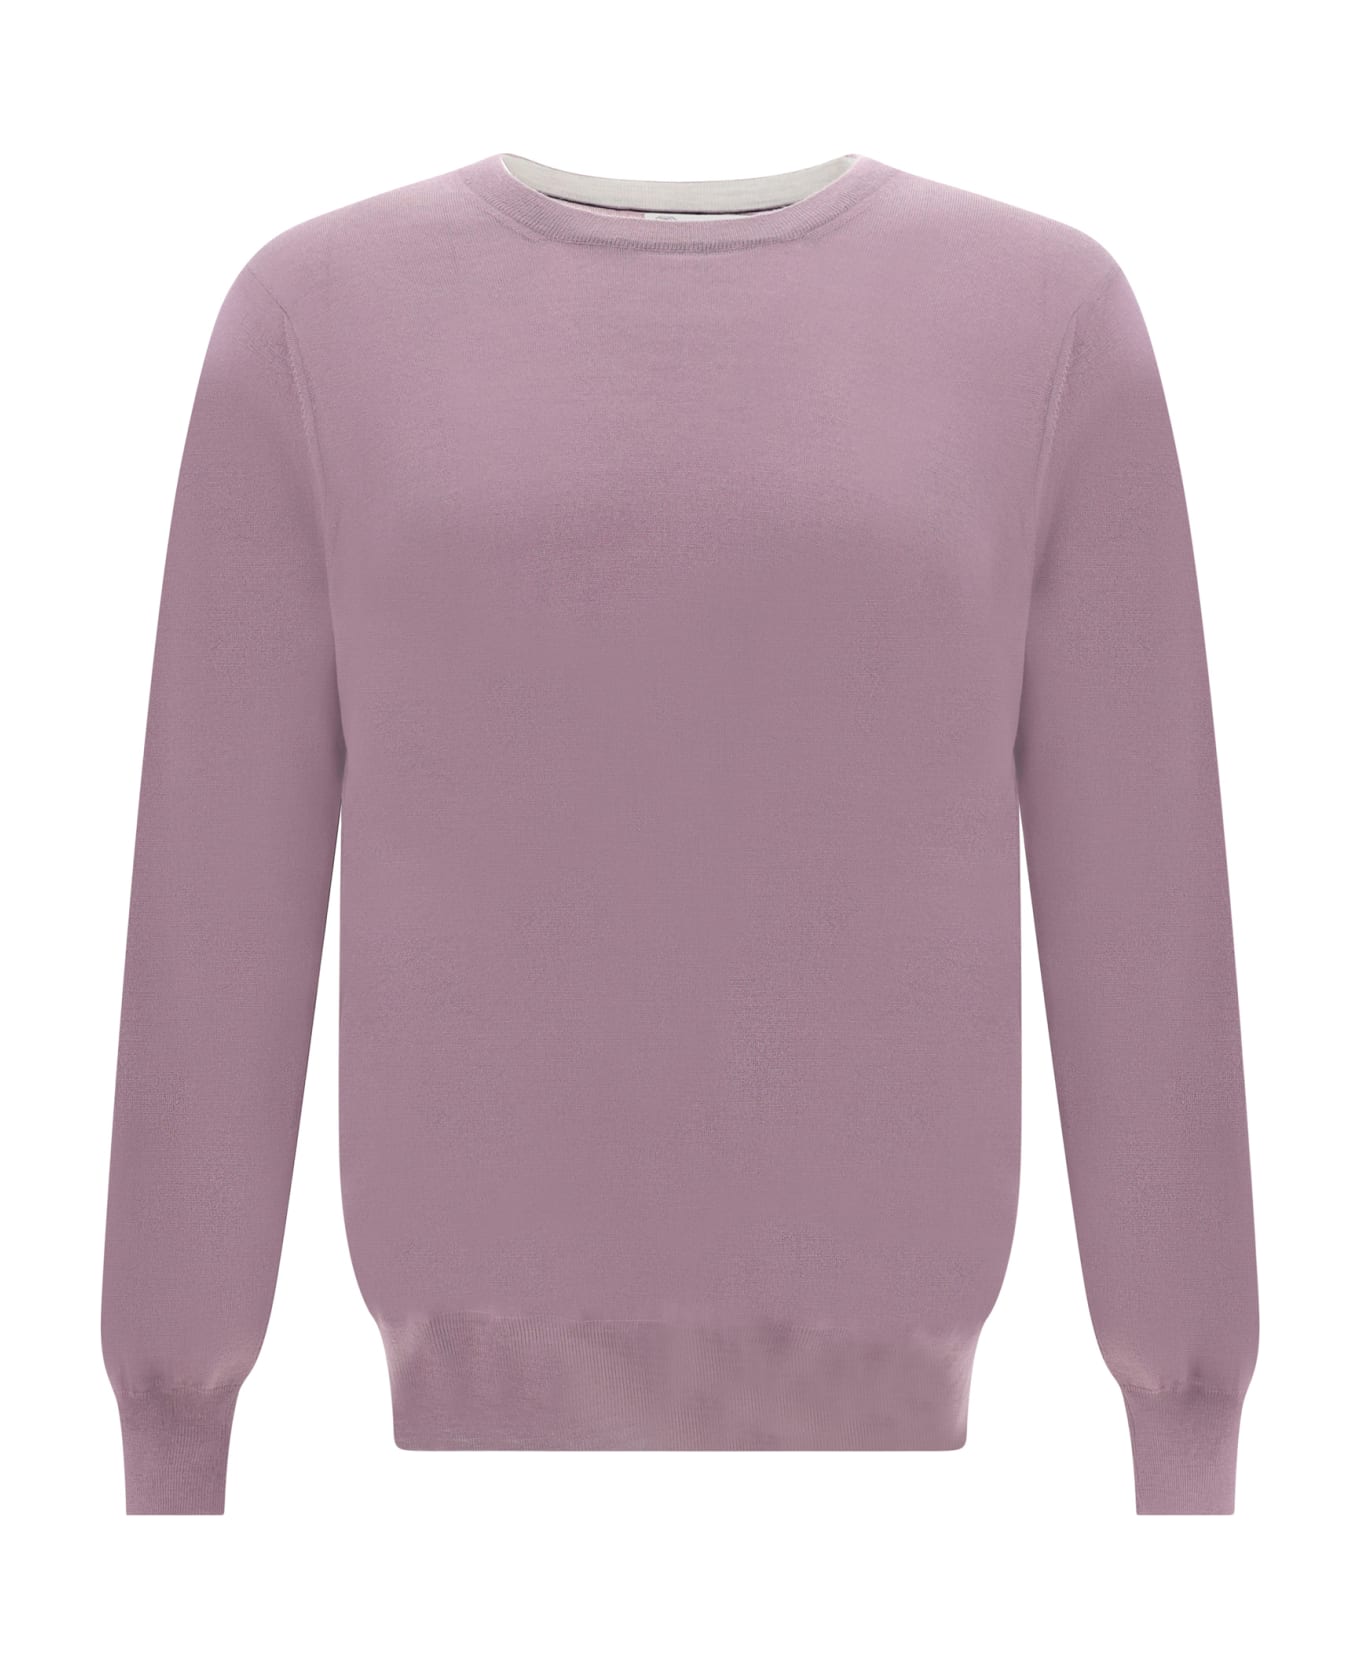 Brunello Cucinelli Fleece Wool Sweater - Malva+nebbia